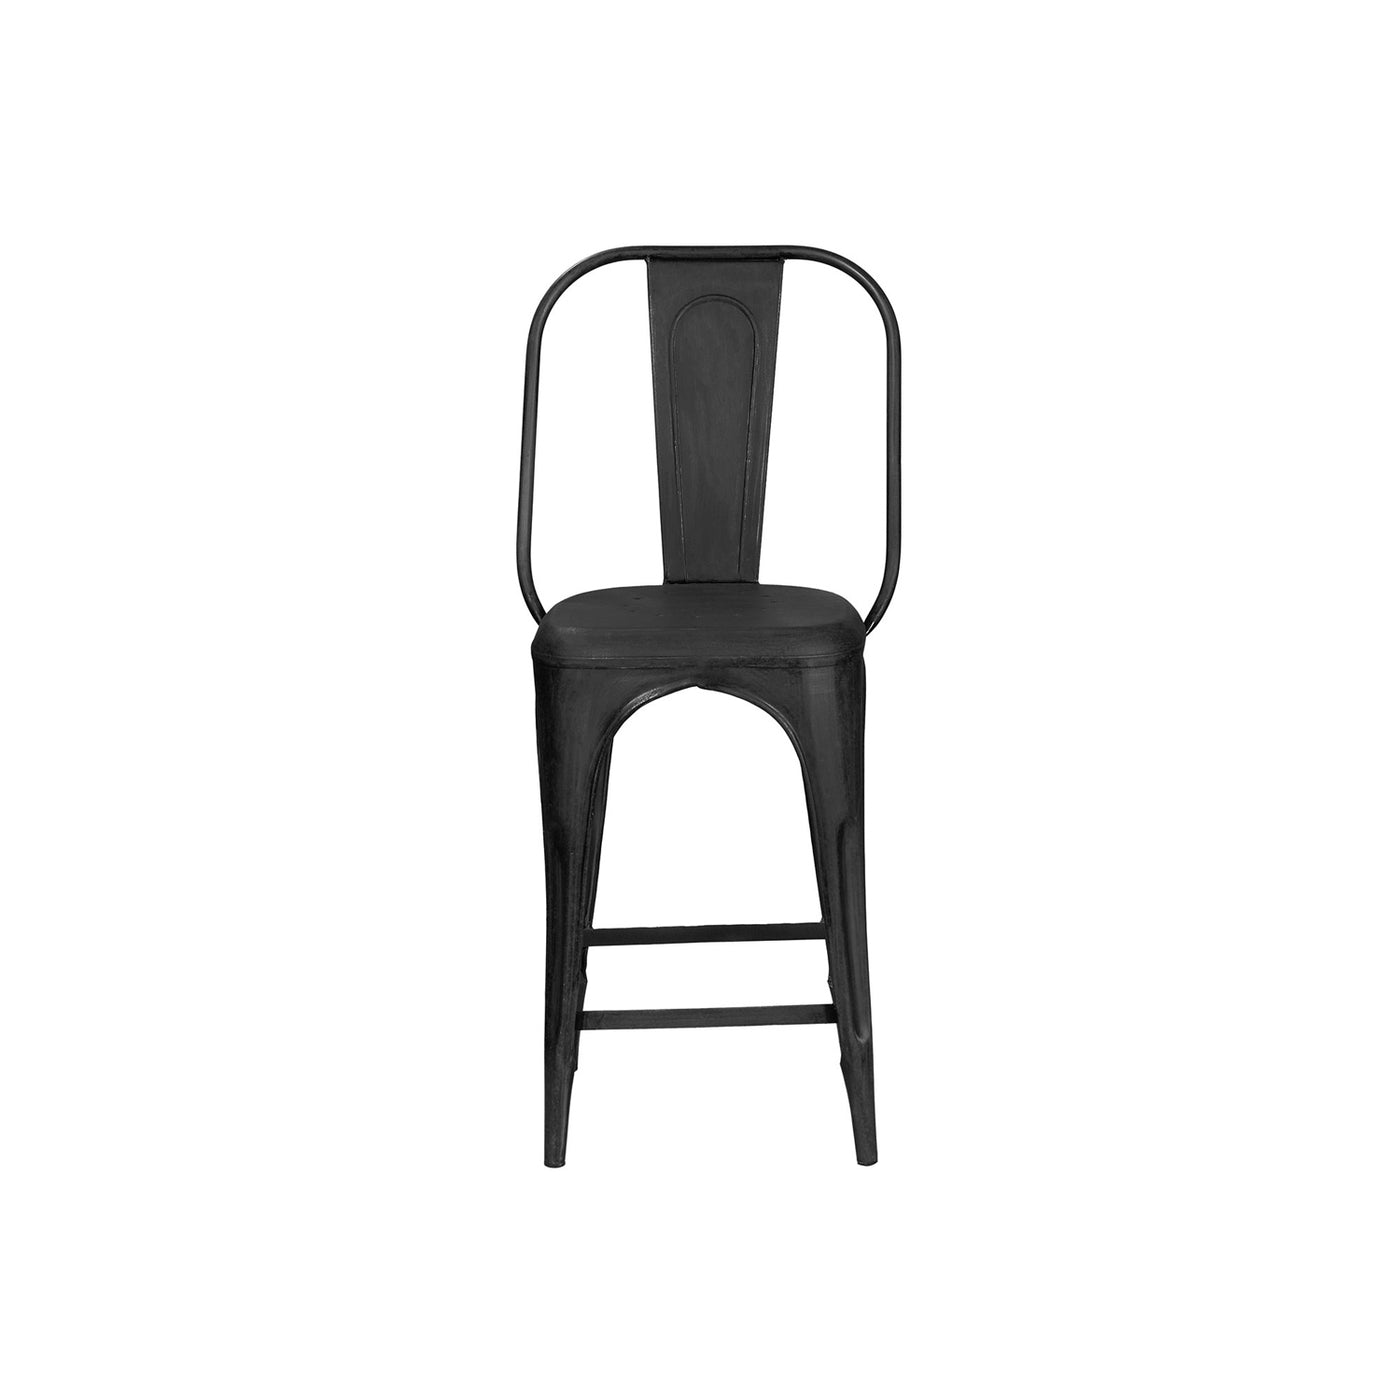 Bois et Cuir's Industrial Series Dining Chair—Distressed Metal in Black—Tall